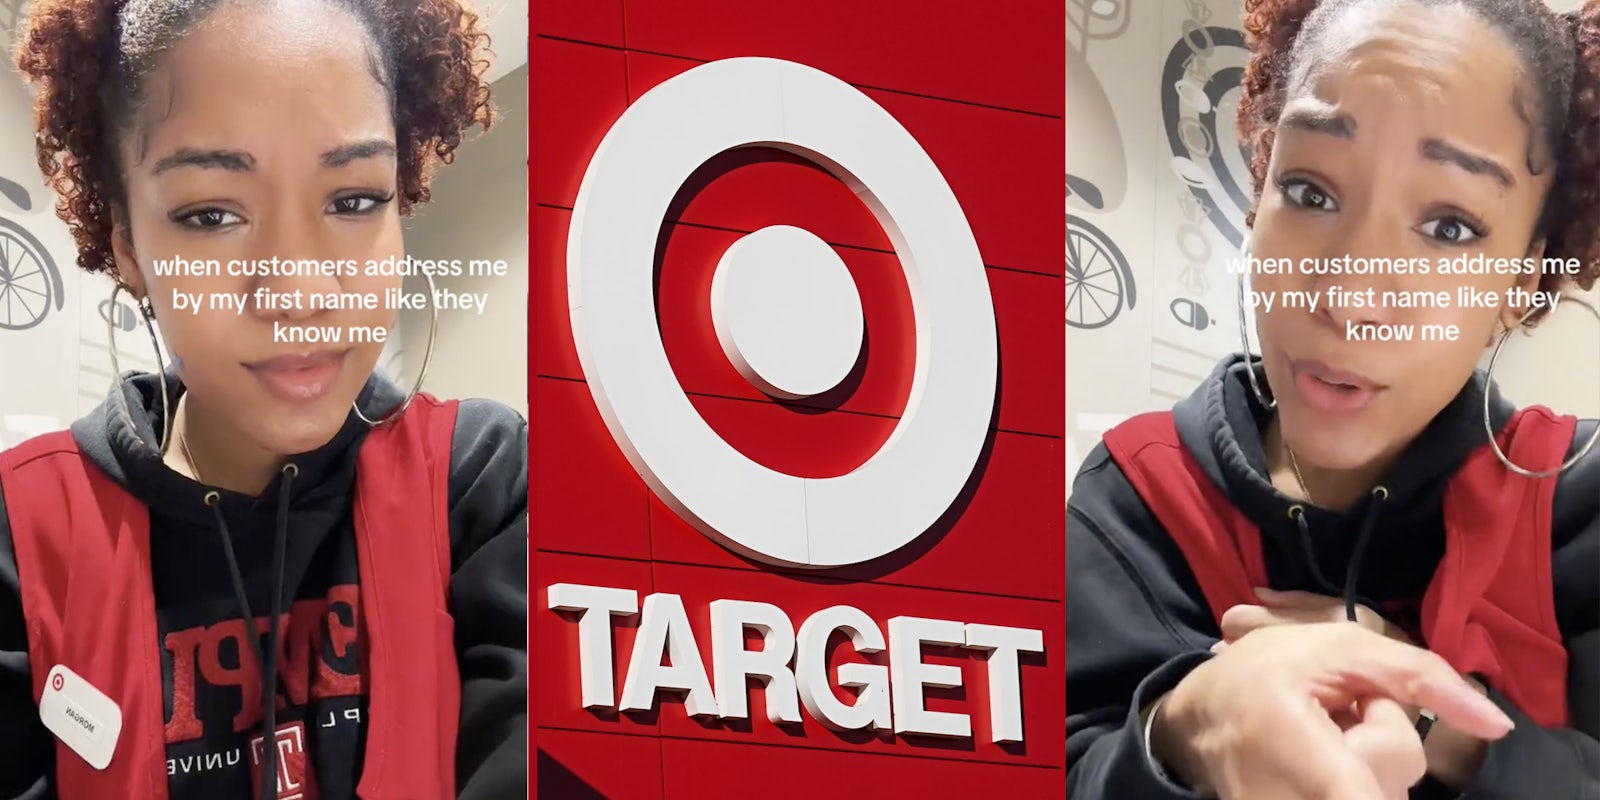 Woman target worker(l+r), Target logo(c)